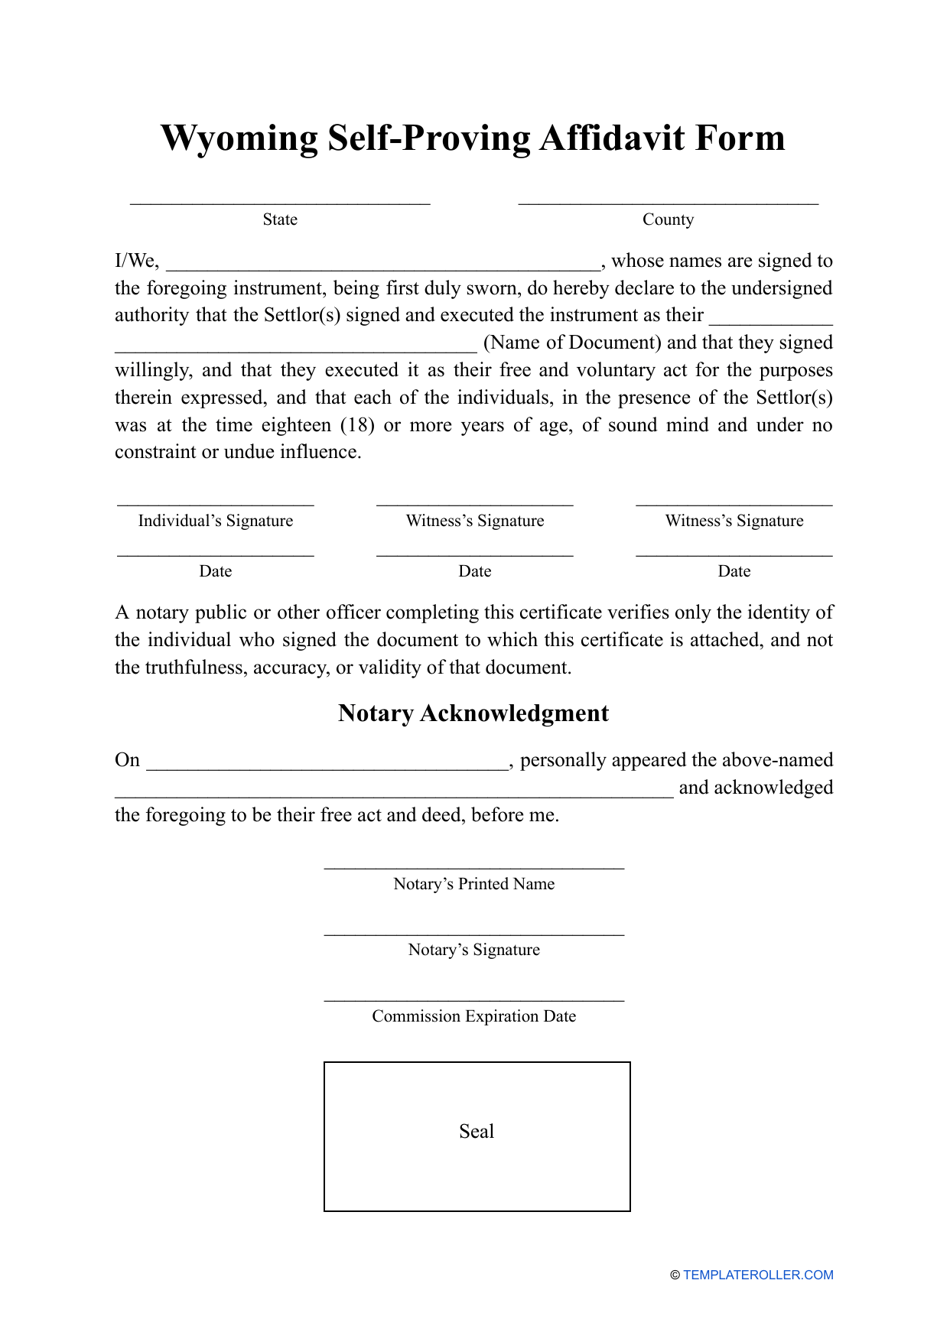 Self-proving Affidavit Form - Wyoming, Page 1